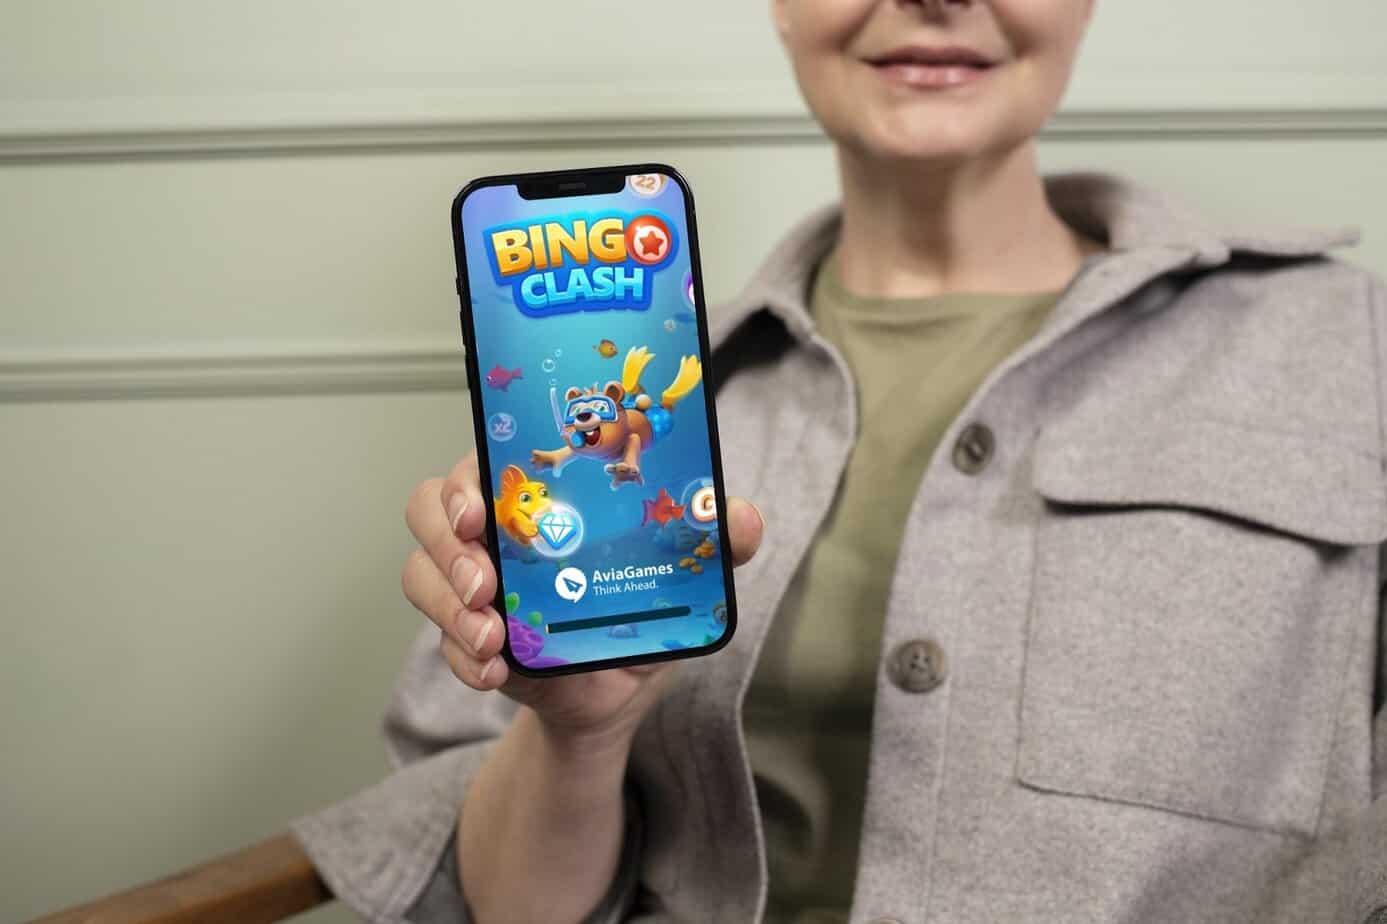 Woman holding a smartphone displaying Bingo Clash